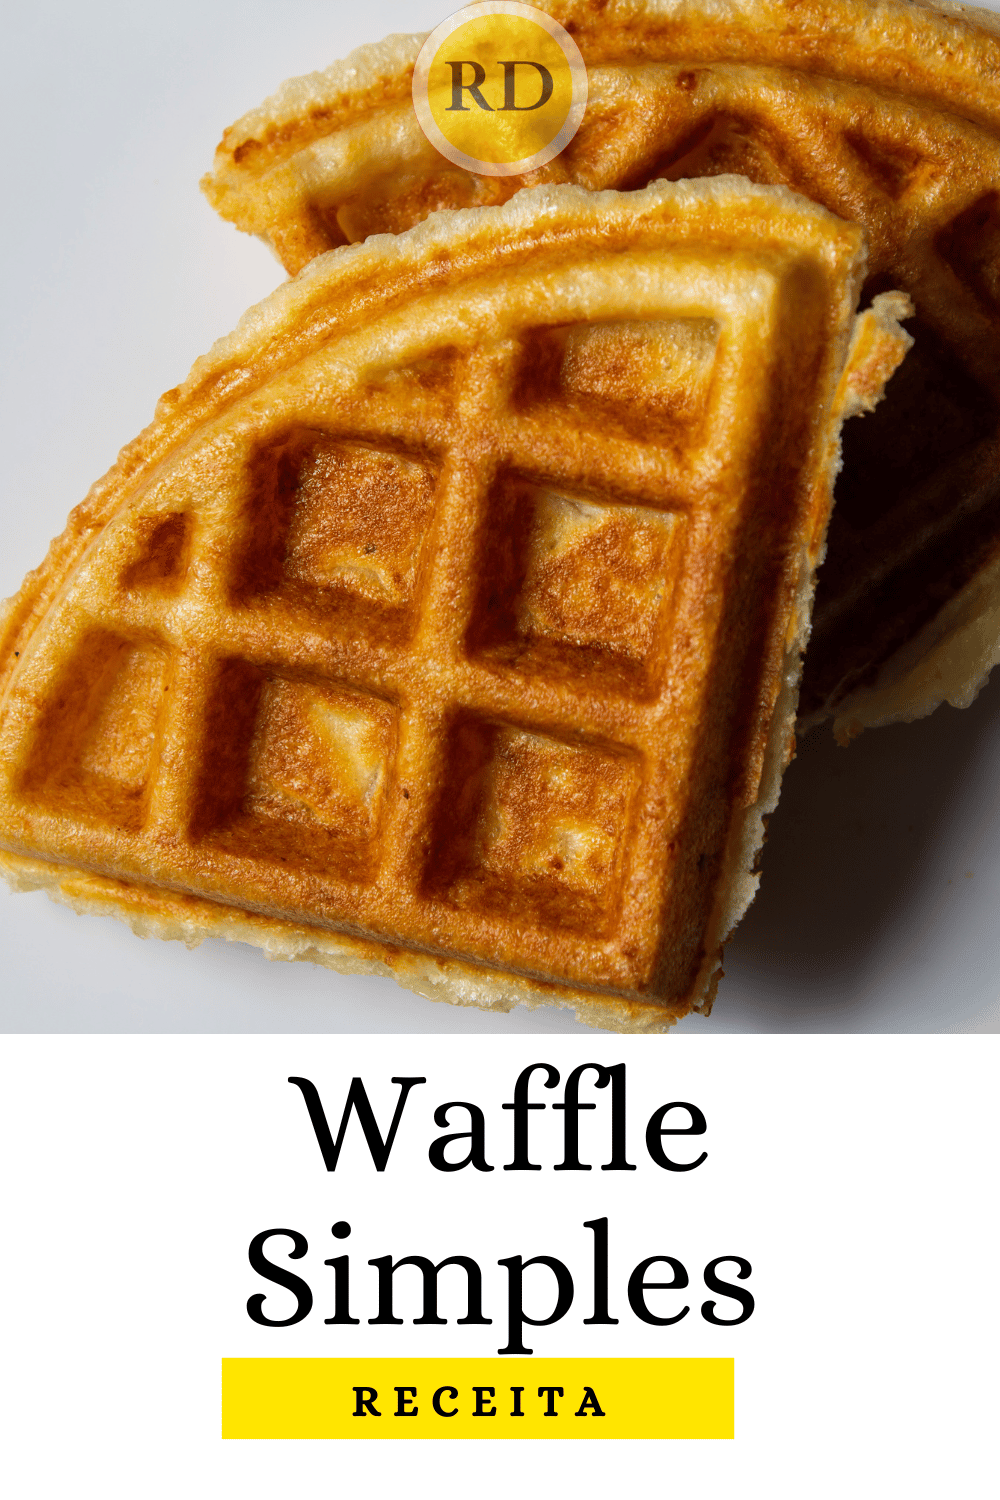 receita de waffle simples